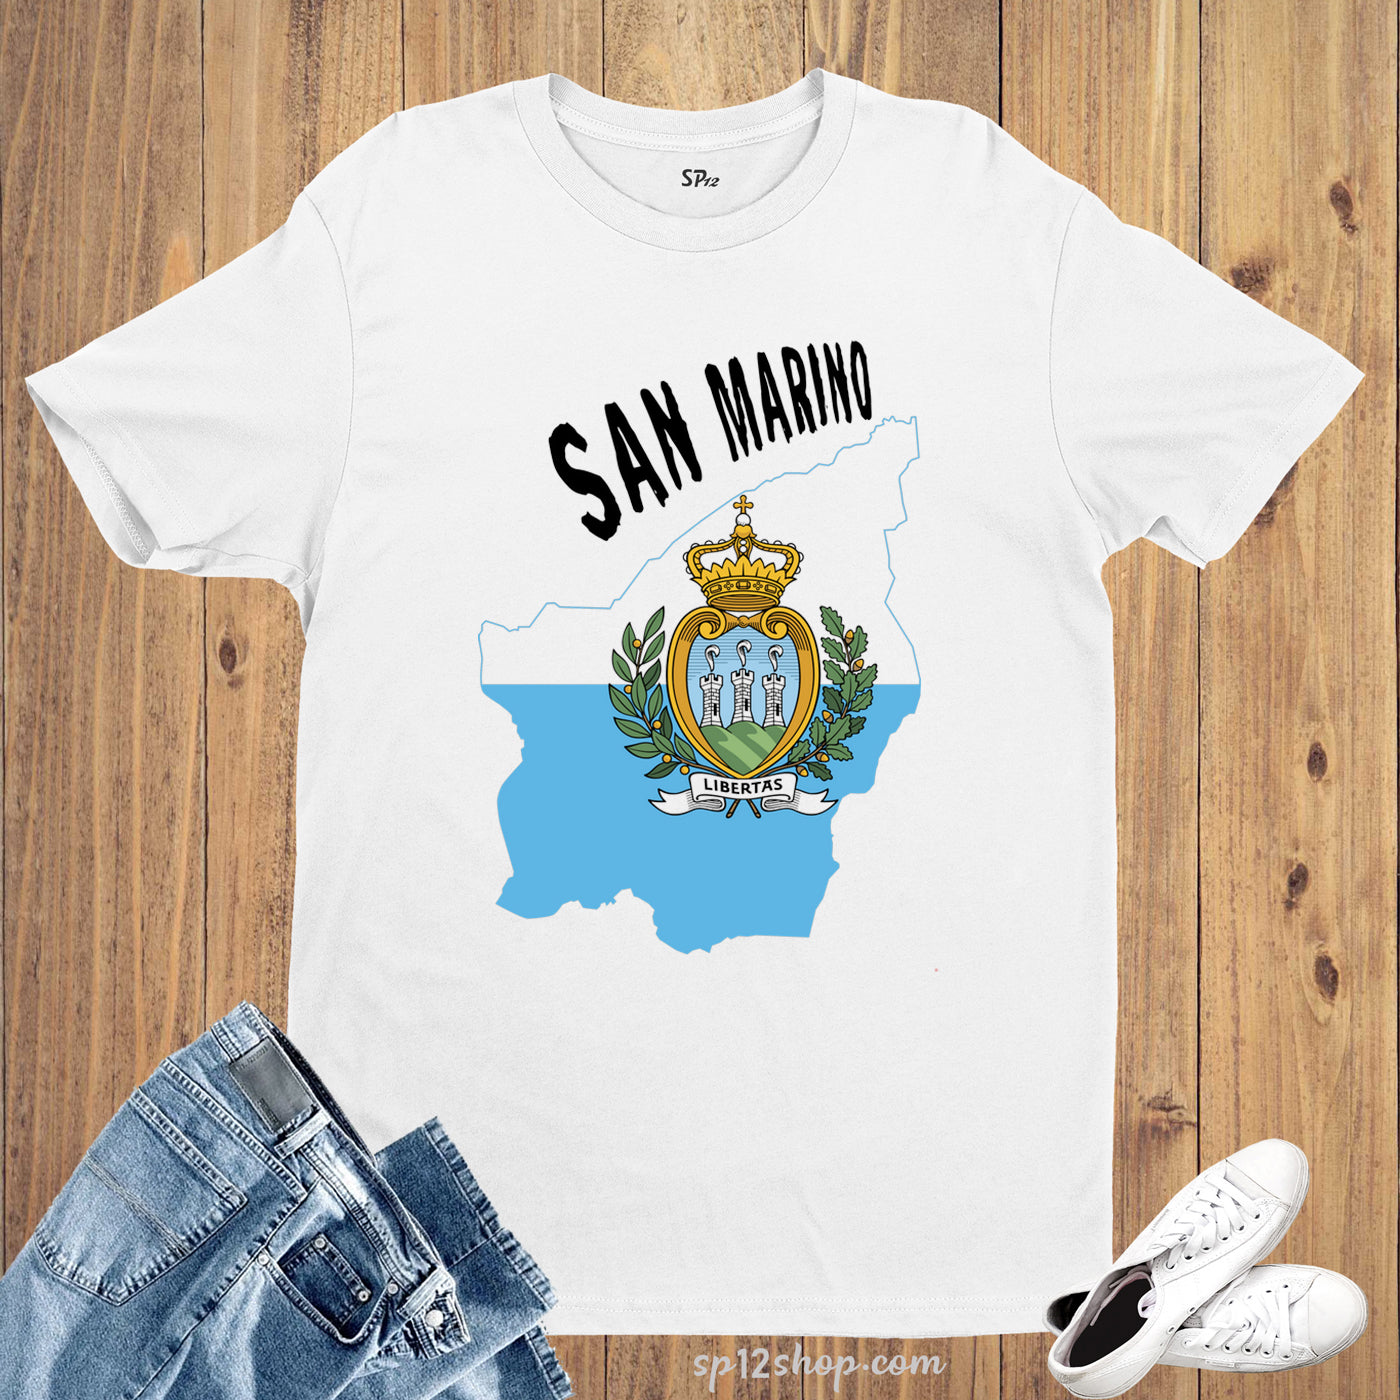 San Marino Flag T Shirt Olympics FIFA World Cup Country Flag Tee Shirt